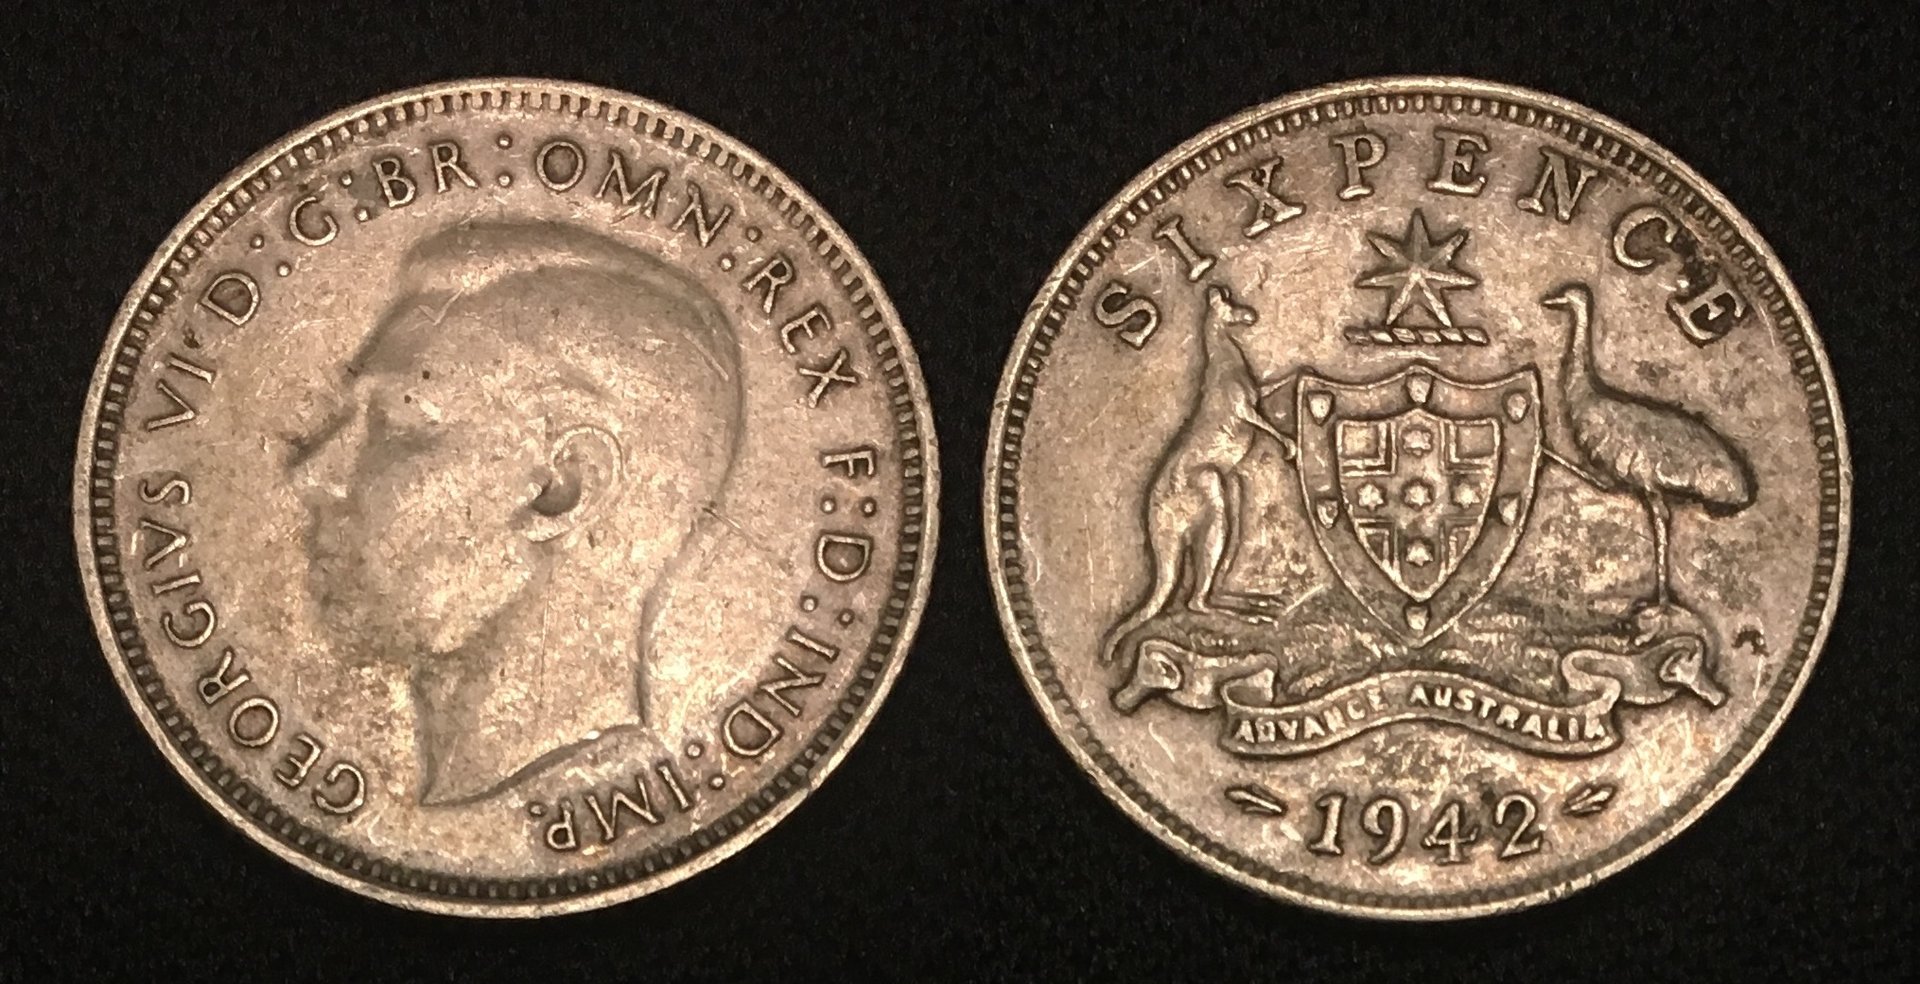 1942 6 Pence Combined.jpg